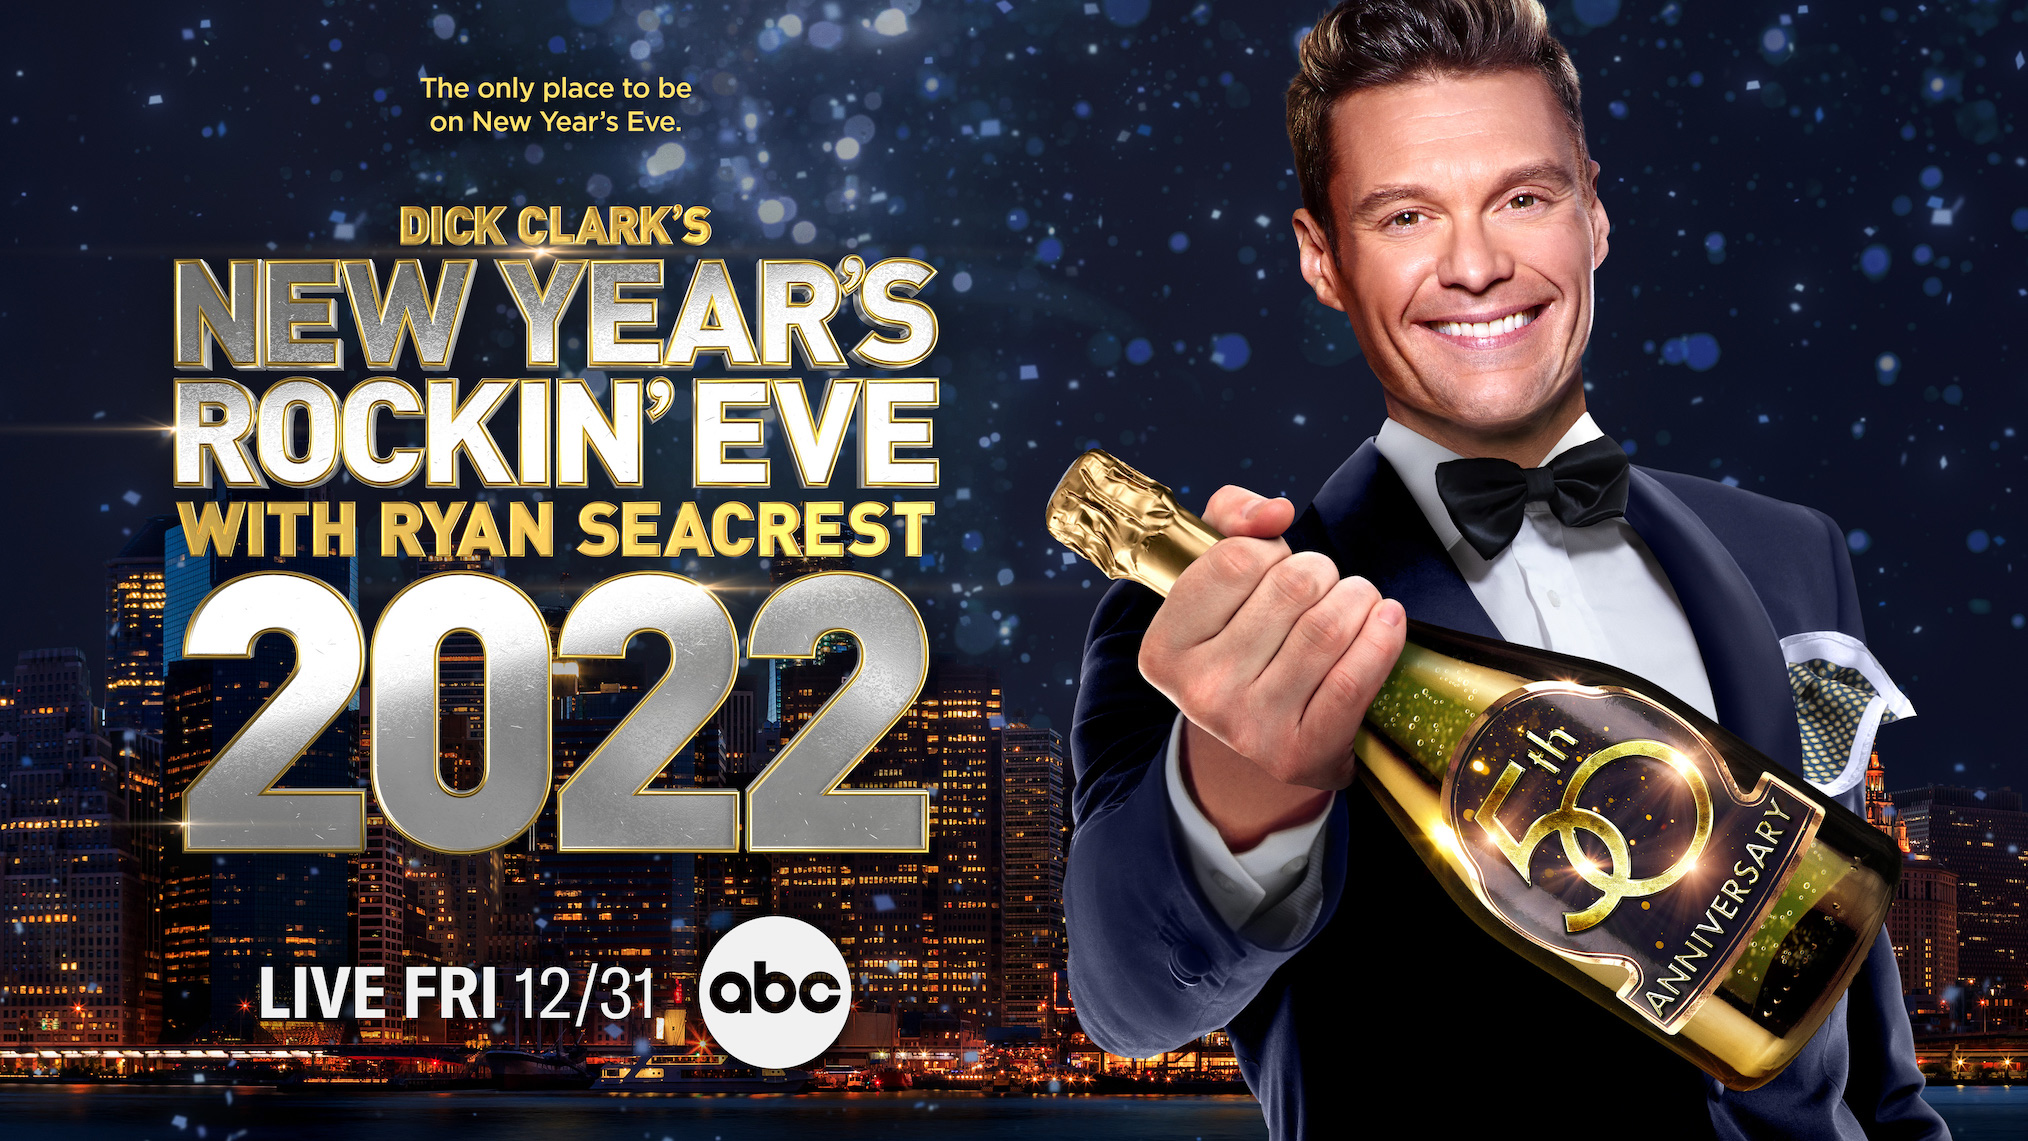 Dick Clark's New Year's Rockin' Eve With Ryan Seacrest 2022